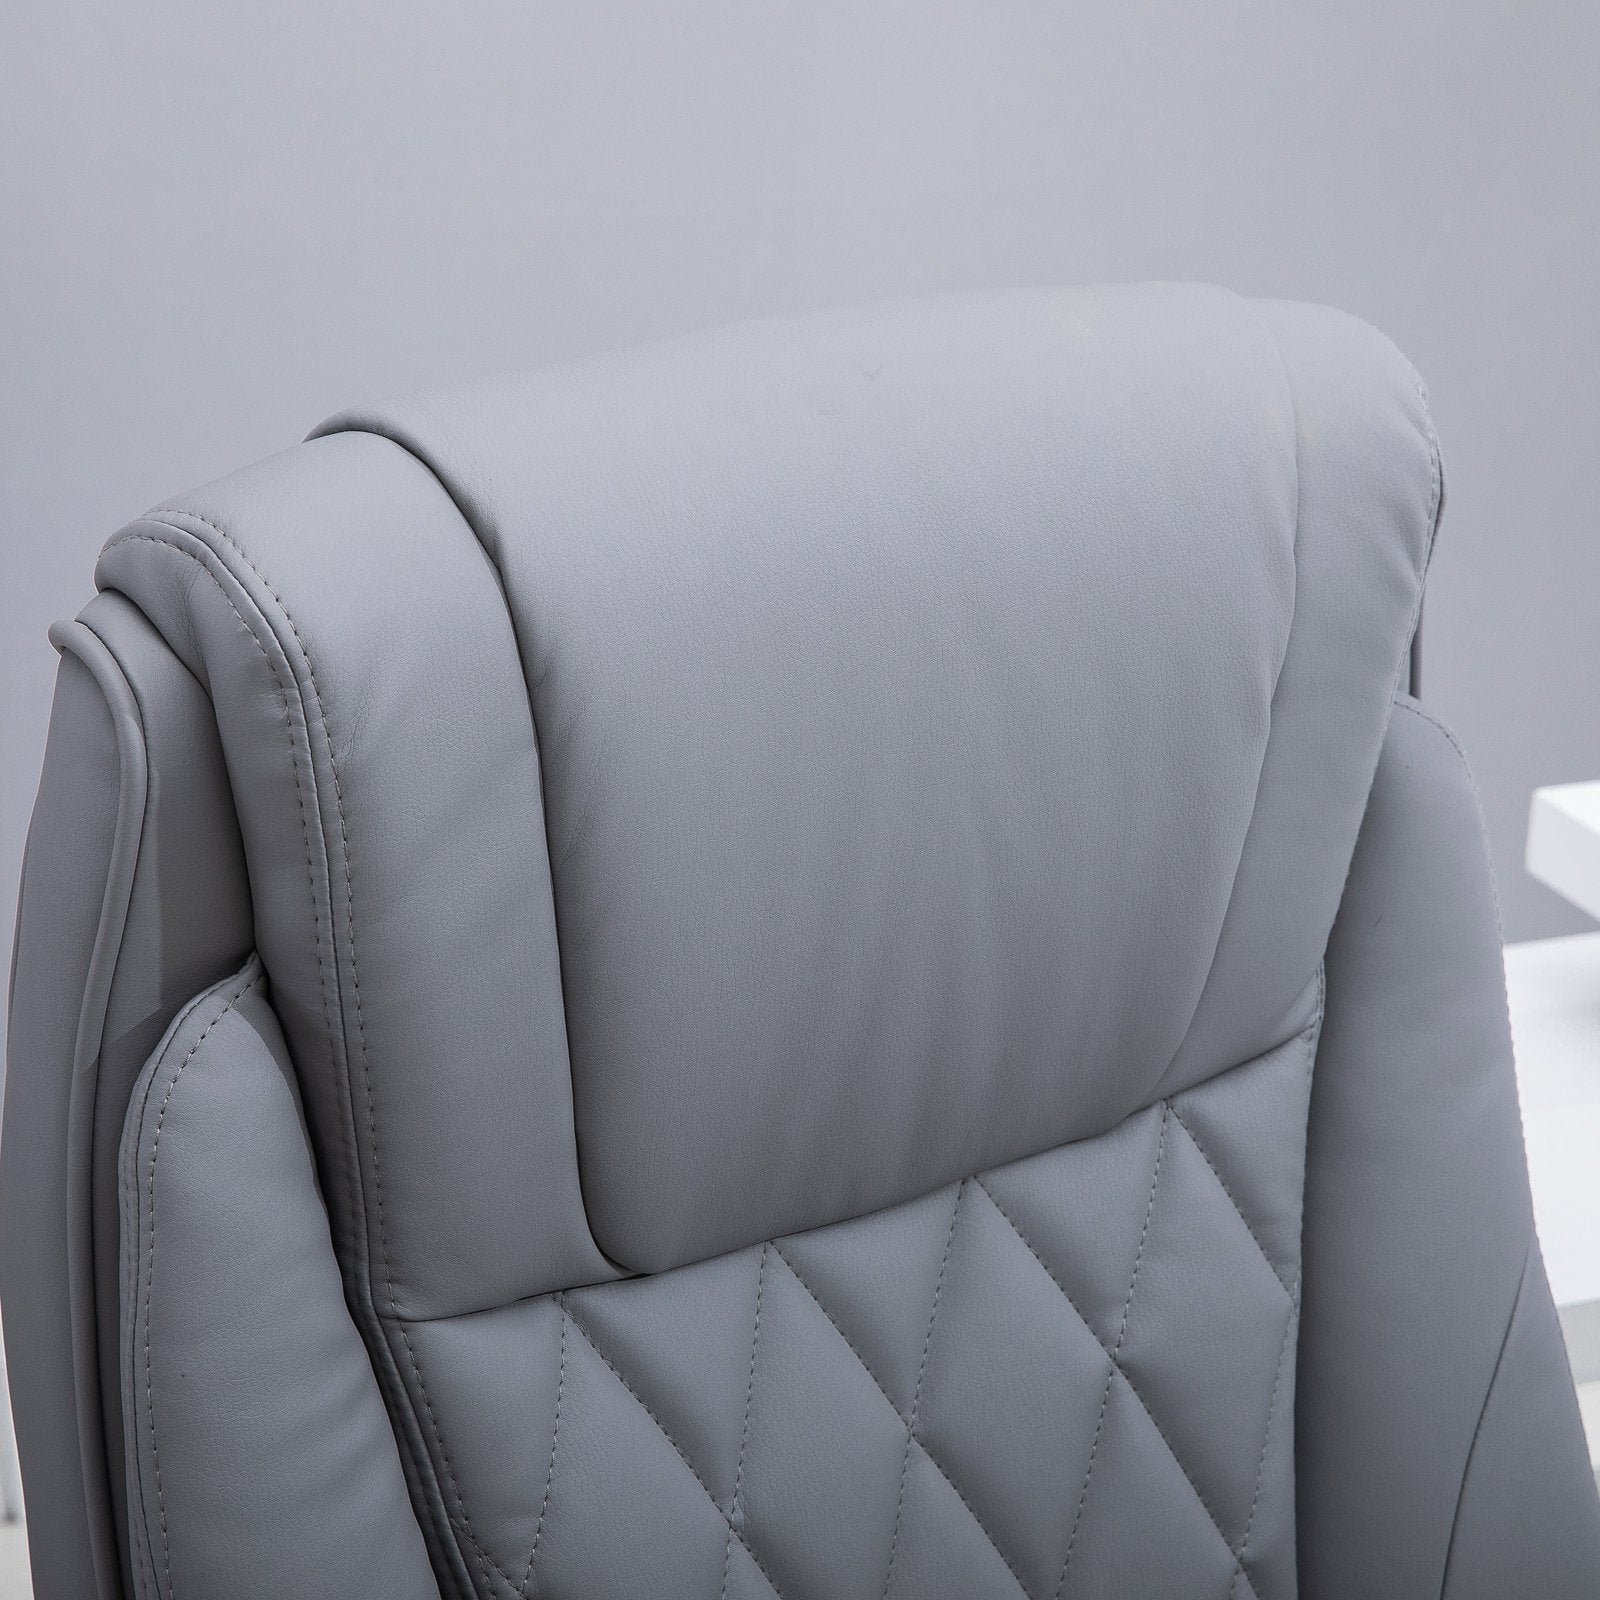 ProperAV Extra PU Leather Ergonomic Swivel Office Chair with Headrest - maplin.co.uk